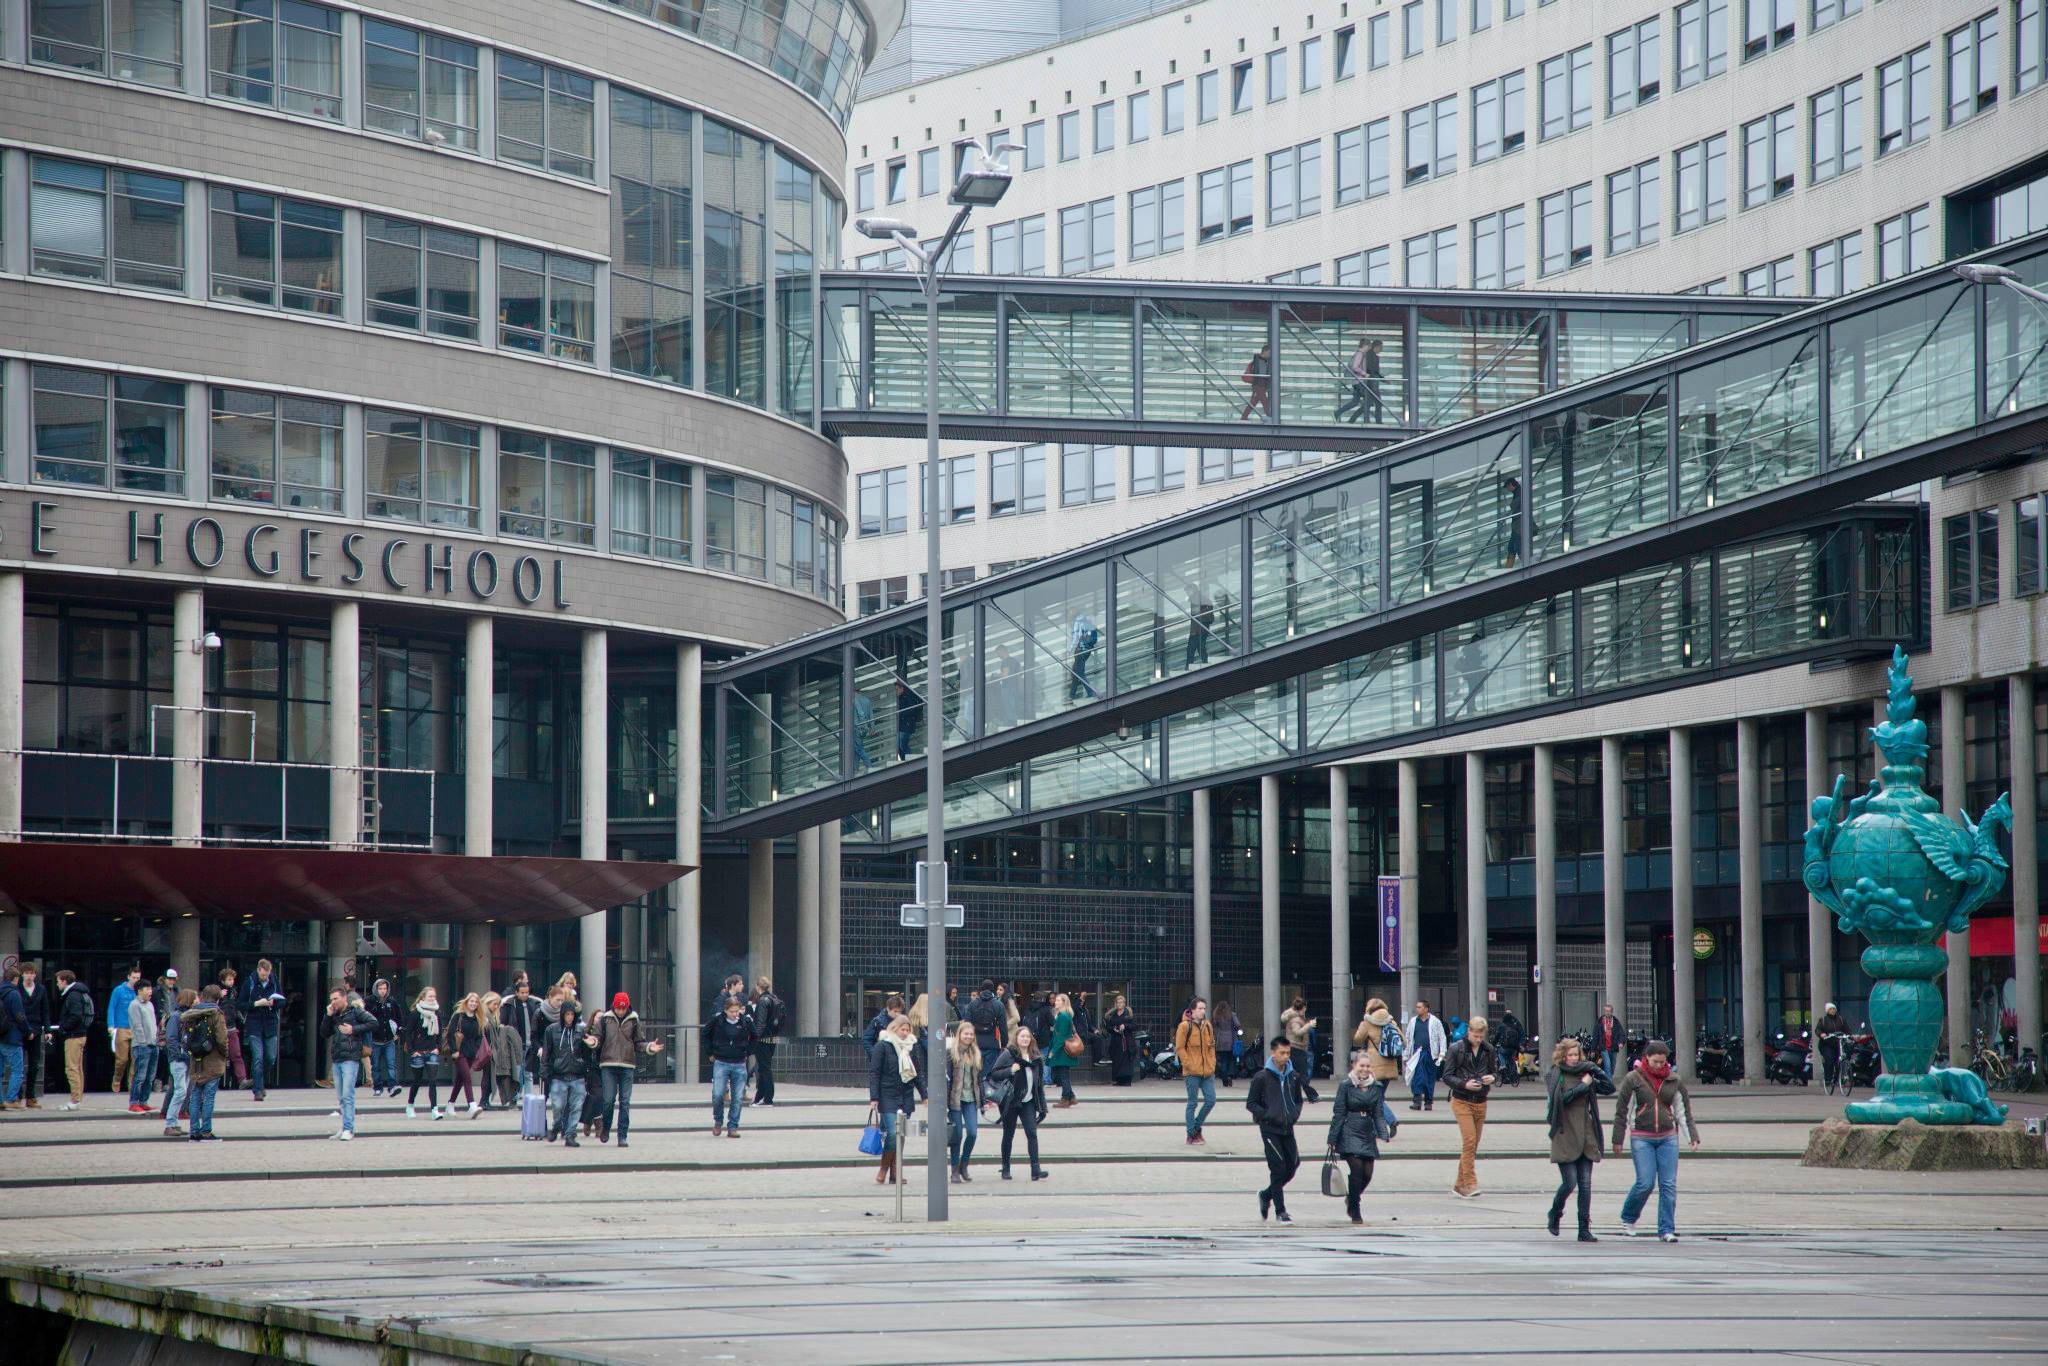 The Hague University